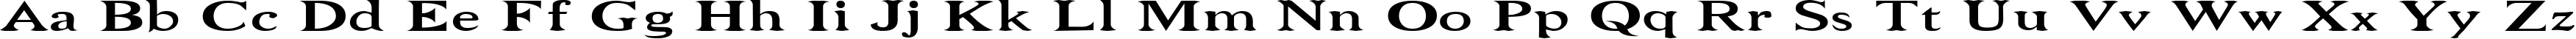 Пример написания английского алфавита шрифтом Niew CroMagnon Wide